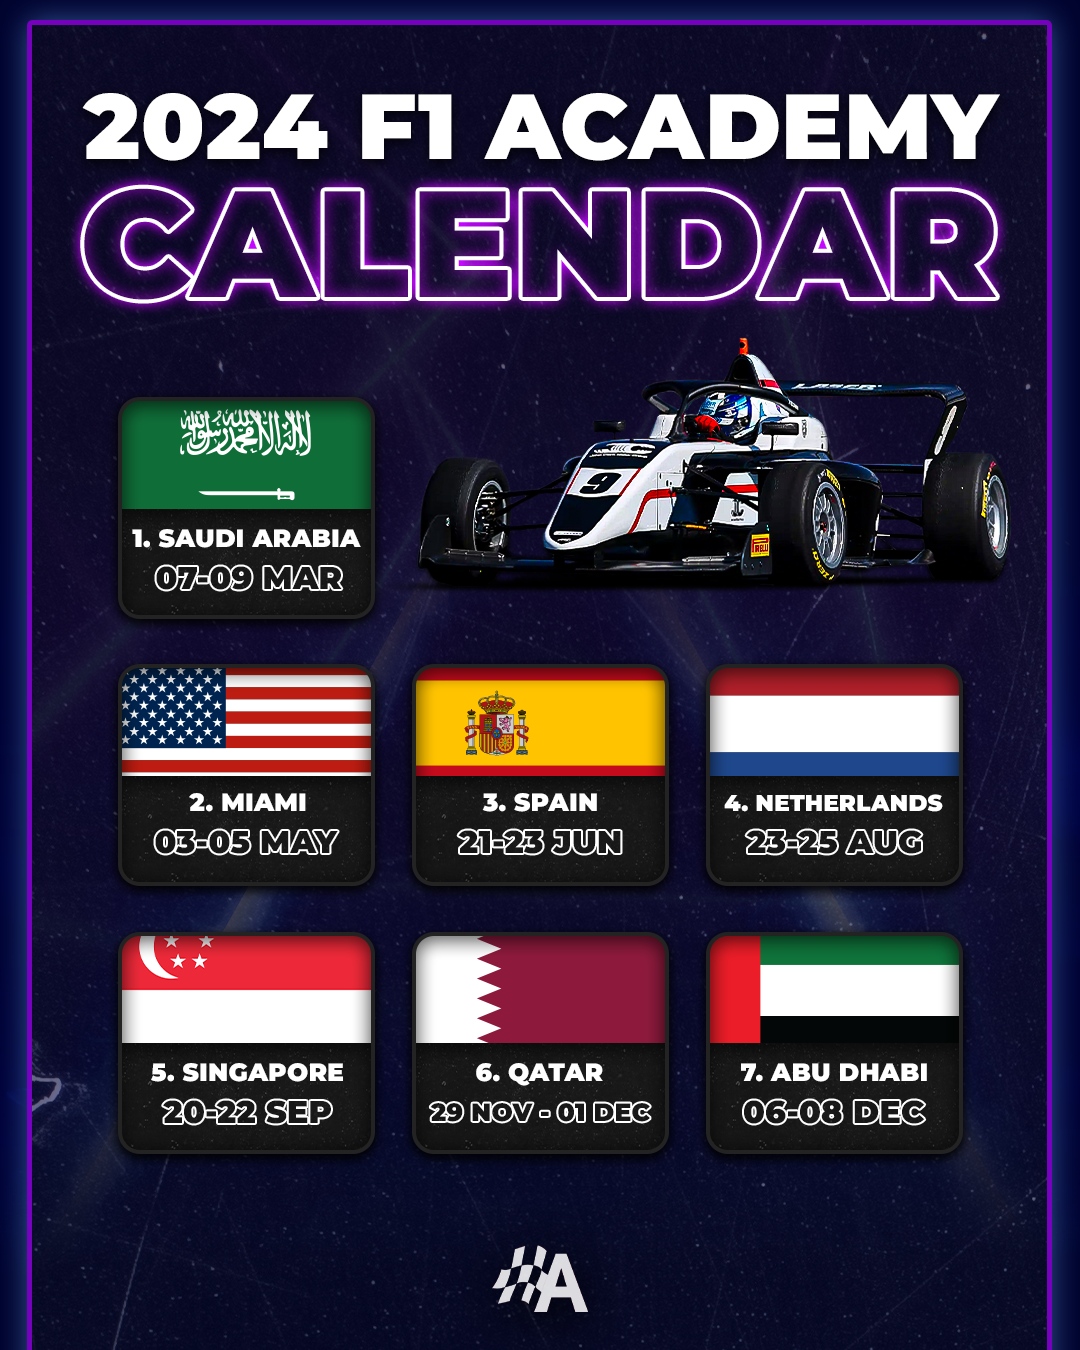 Motorsport Jobs в X: „The 2024 F1 Academy calendar.“ / X